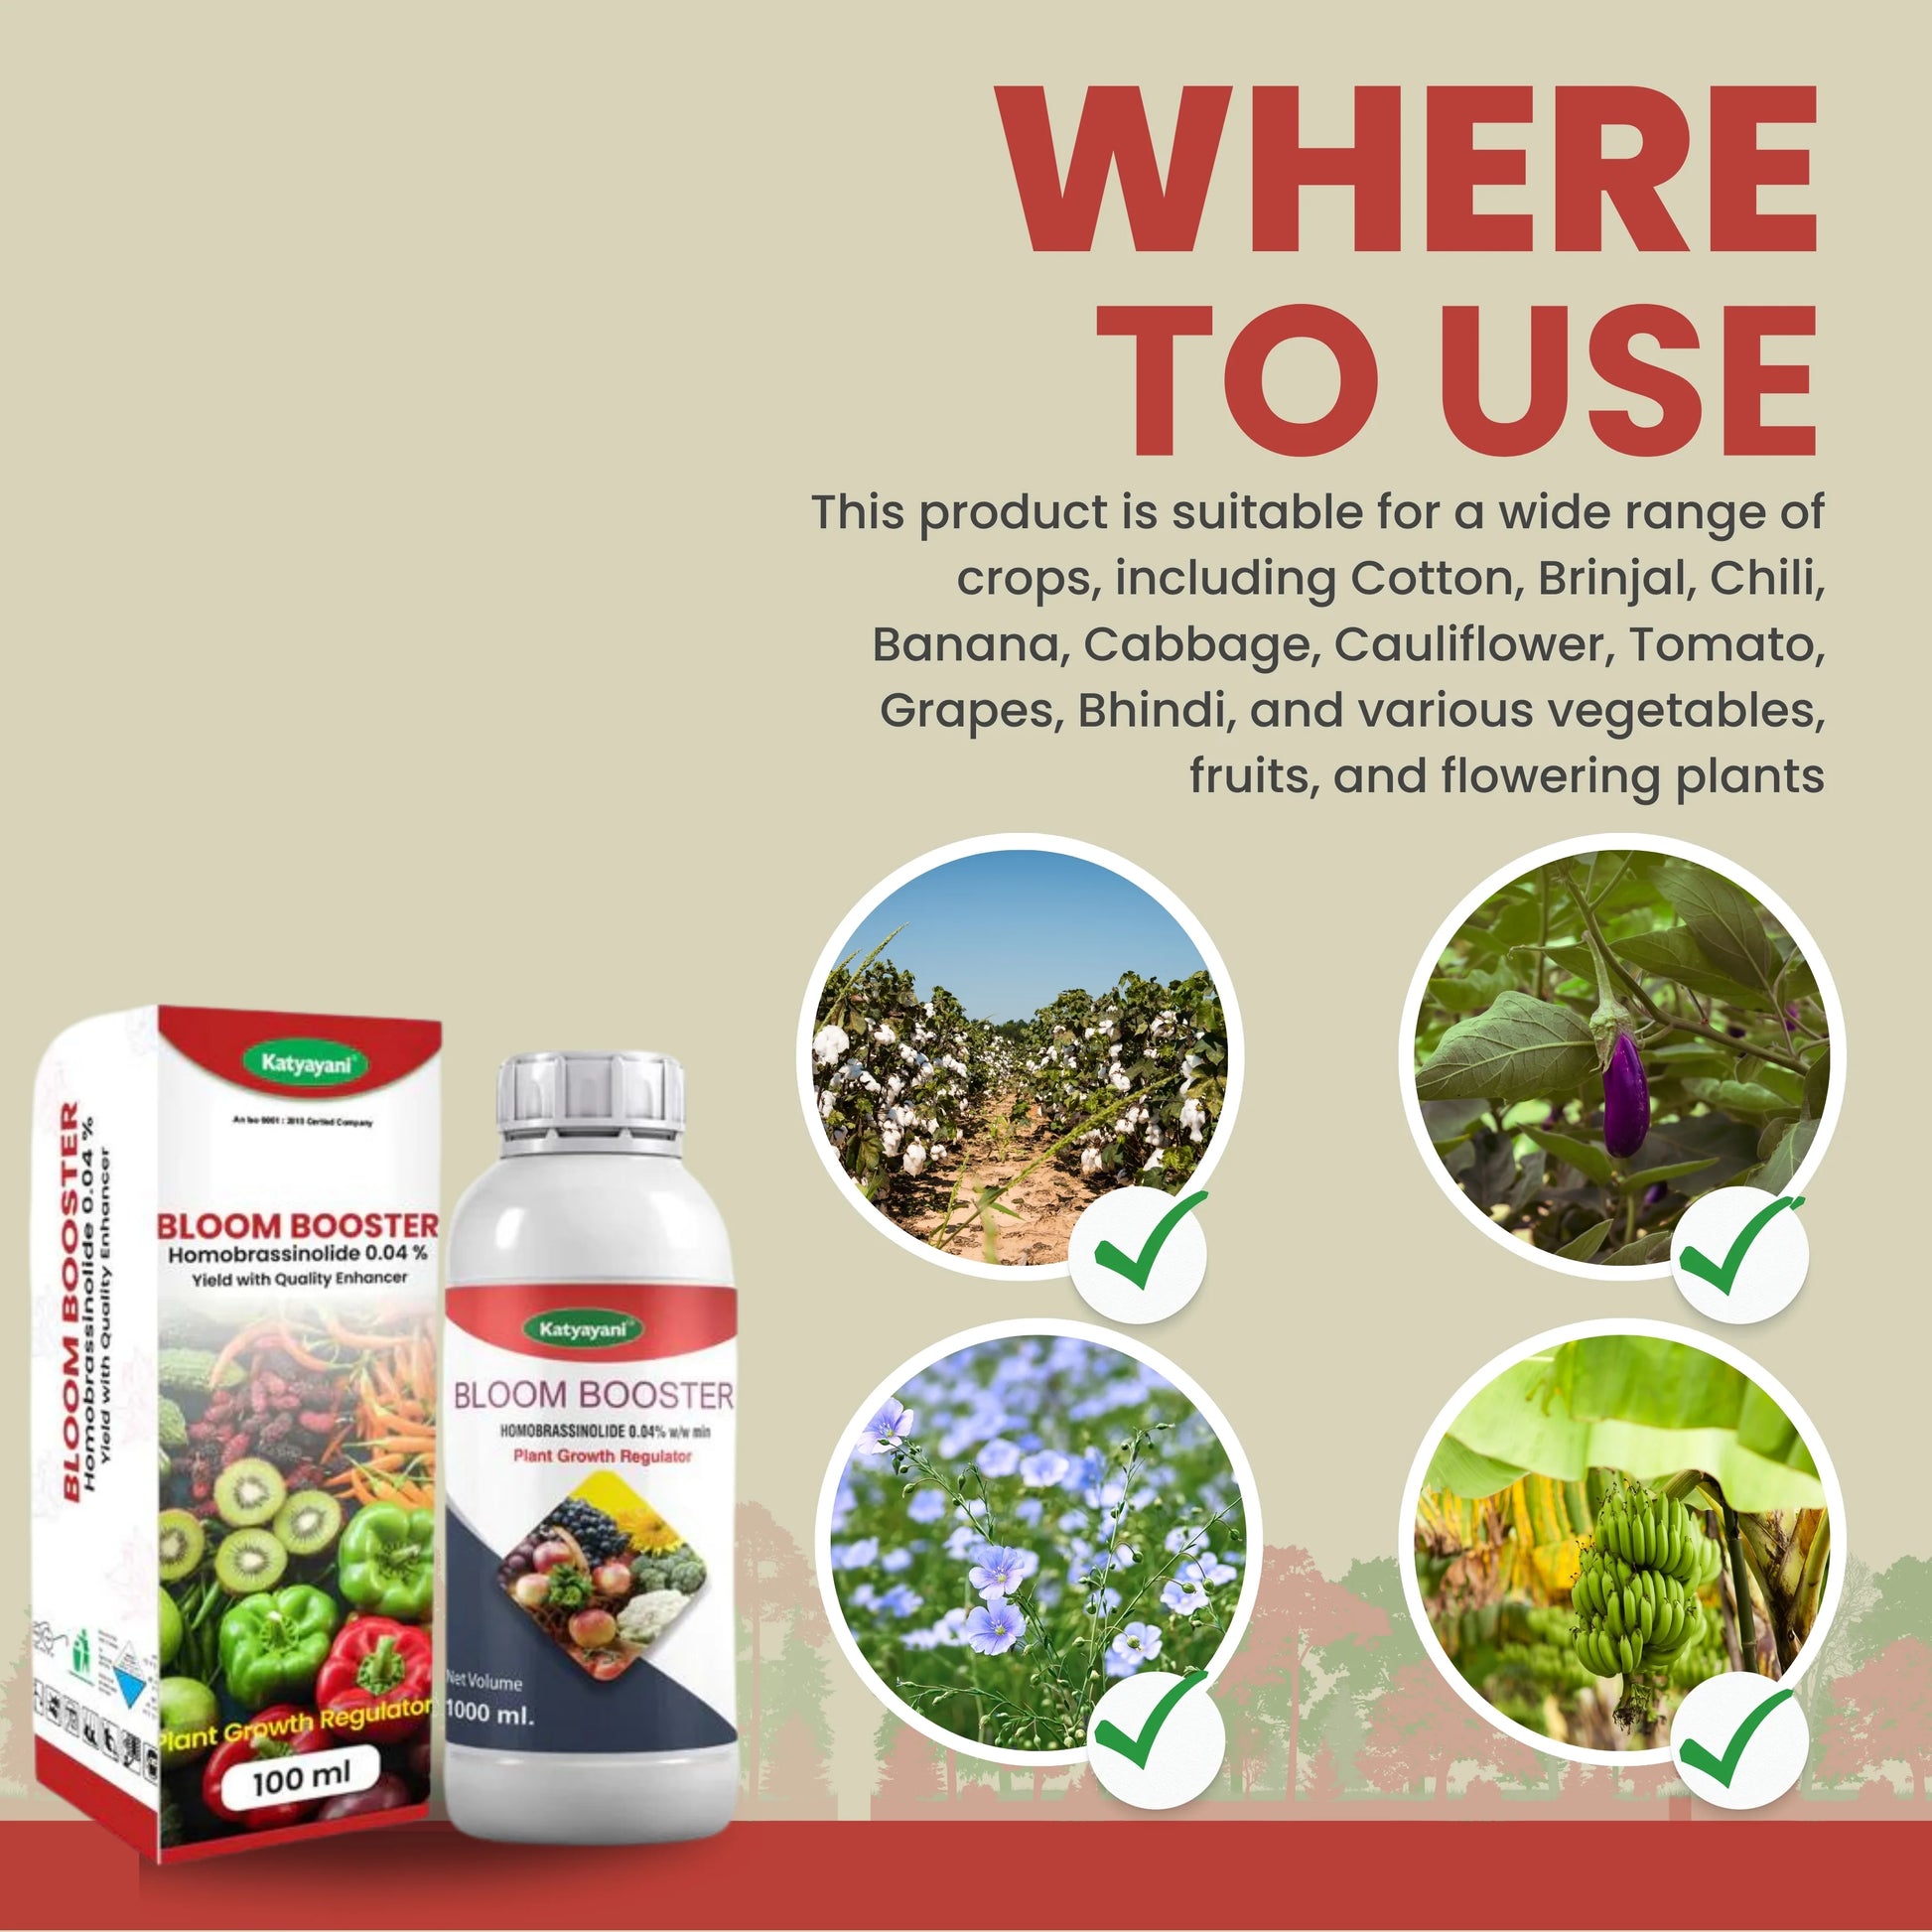 Katyayani  Bloom Booster | Homobrassinolide 0.04 % Plant Growth Regulator for crops